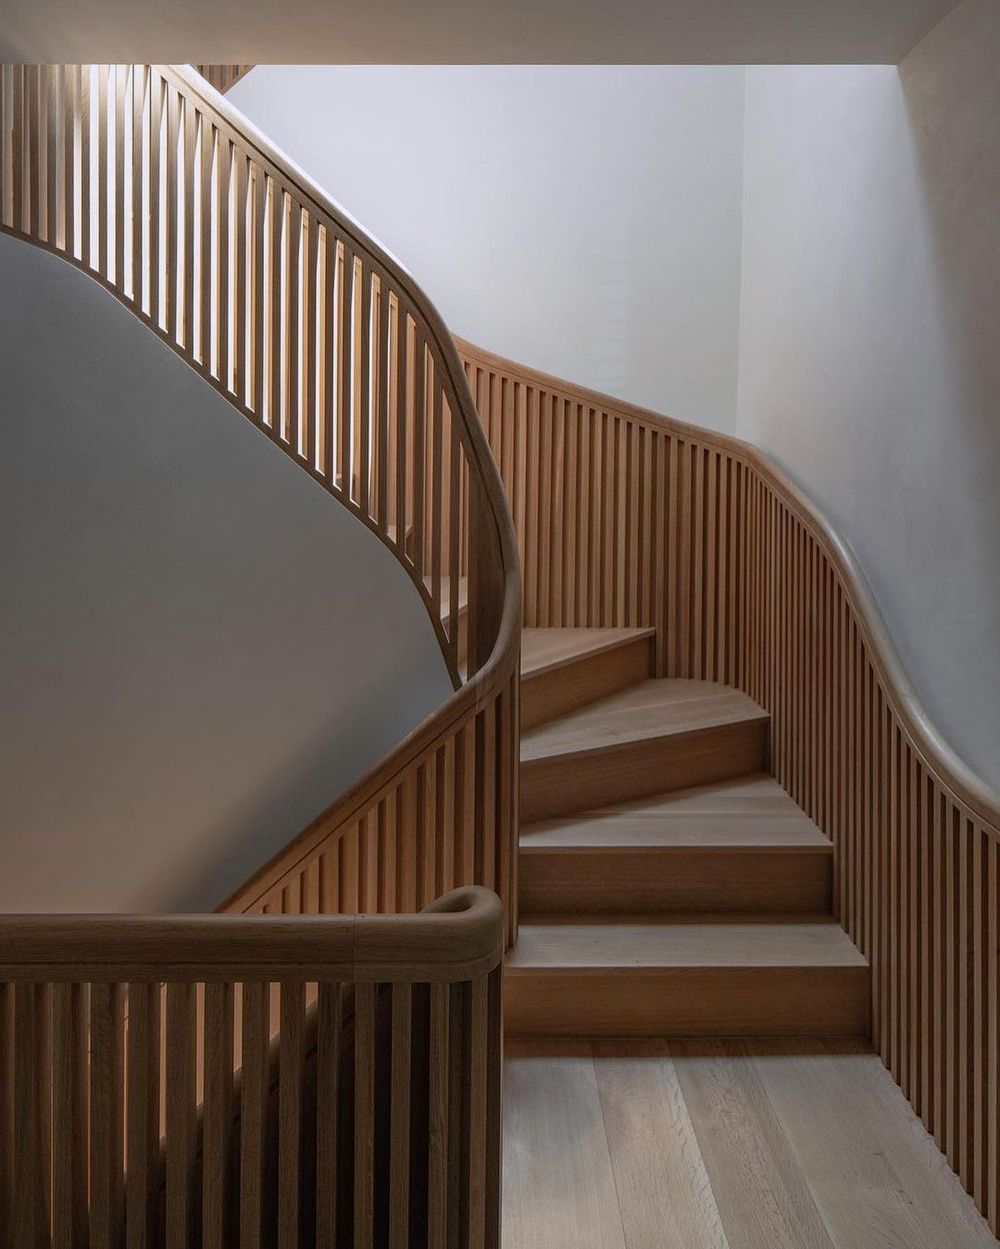 Wood slatt walls staircase @studio.jih